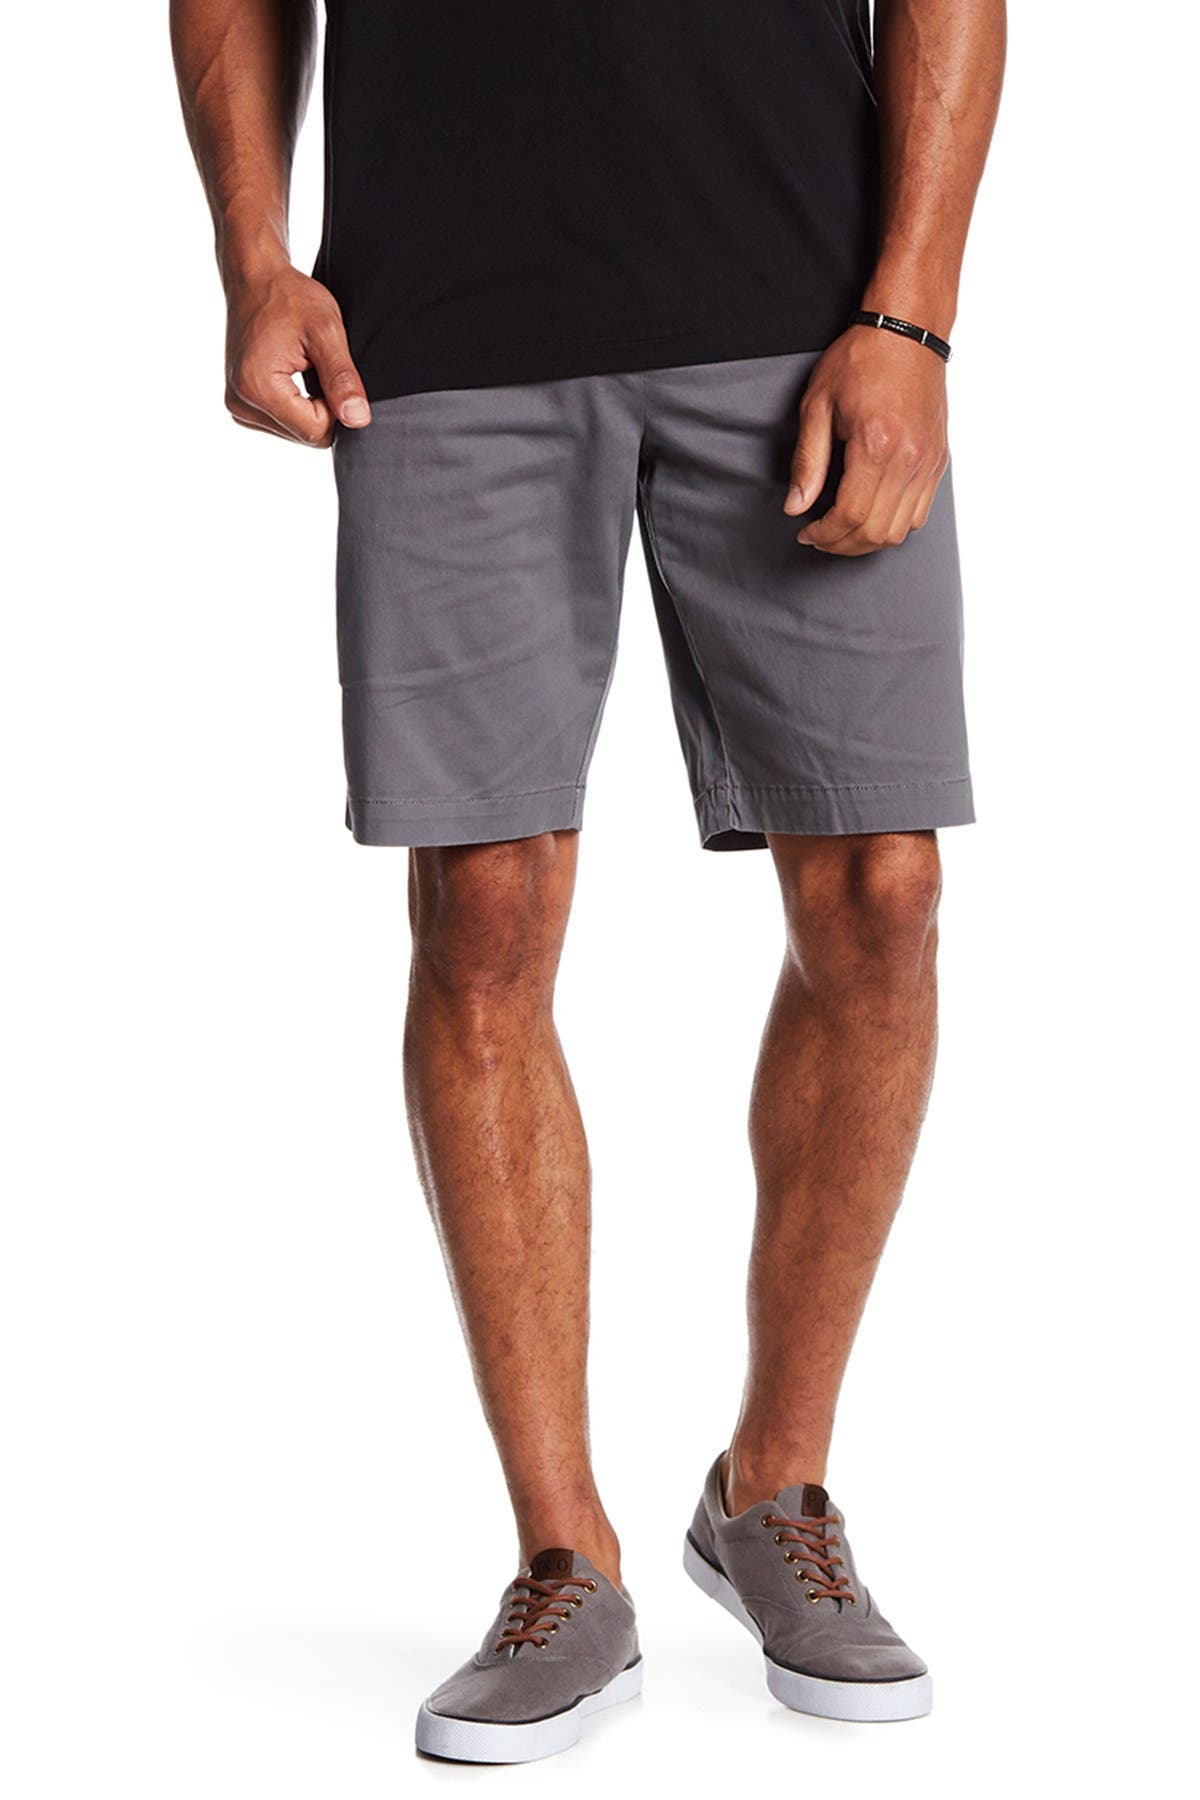 tommy bahama shorts nordstrom rack